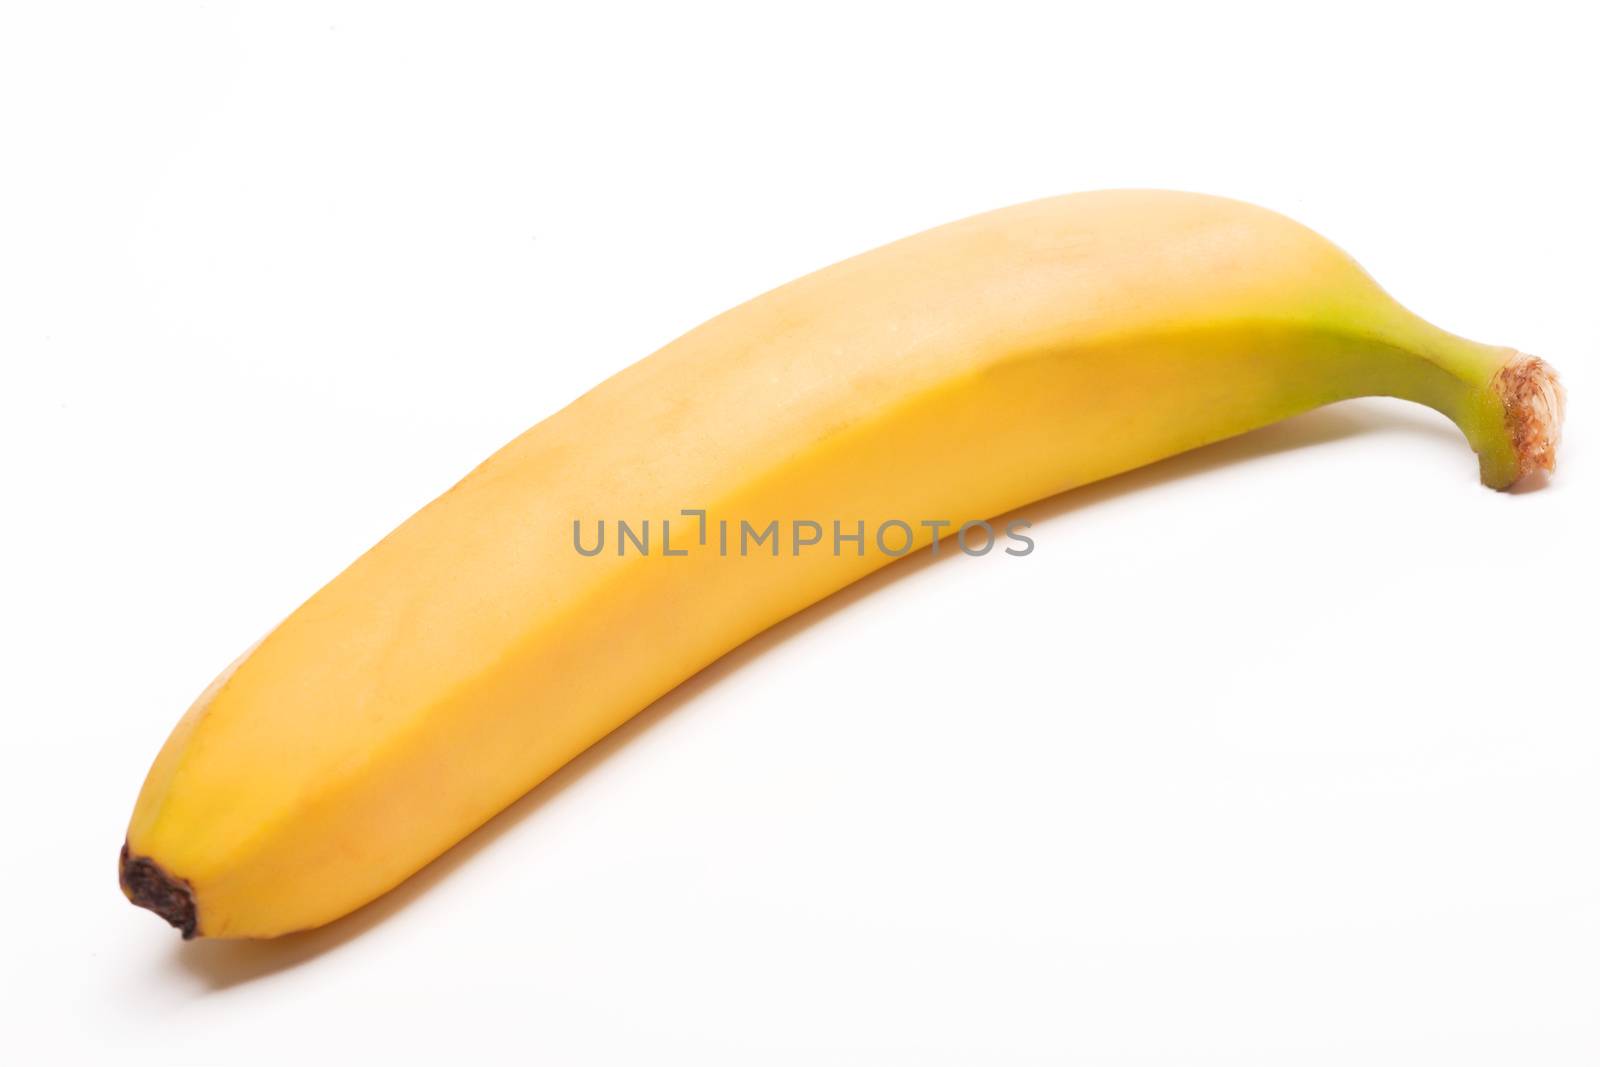 Single banana